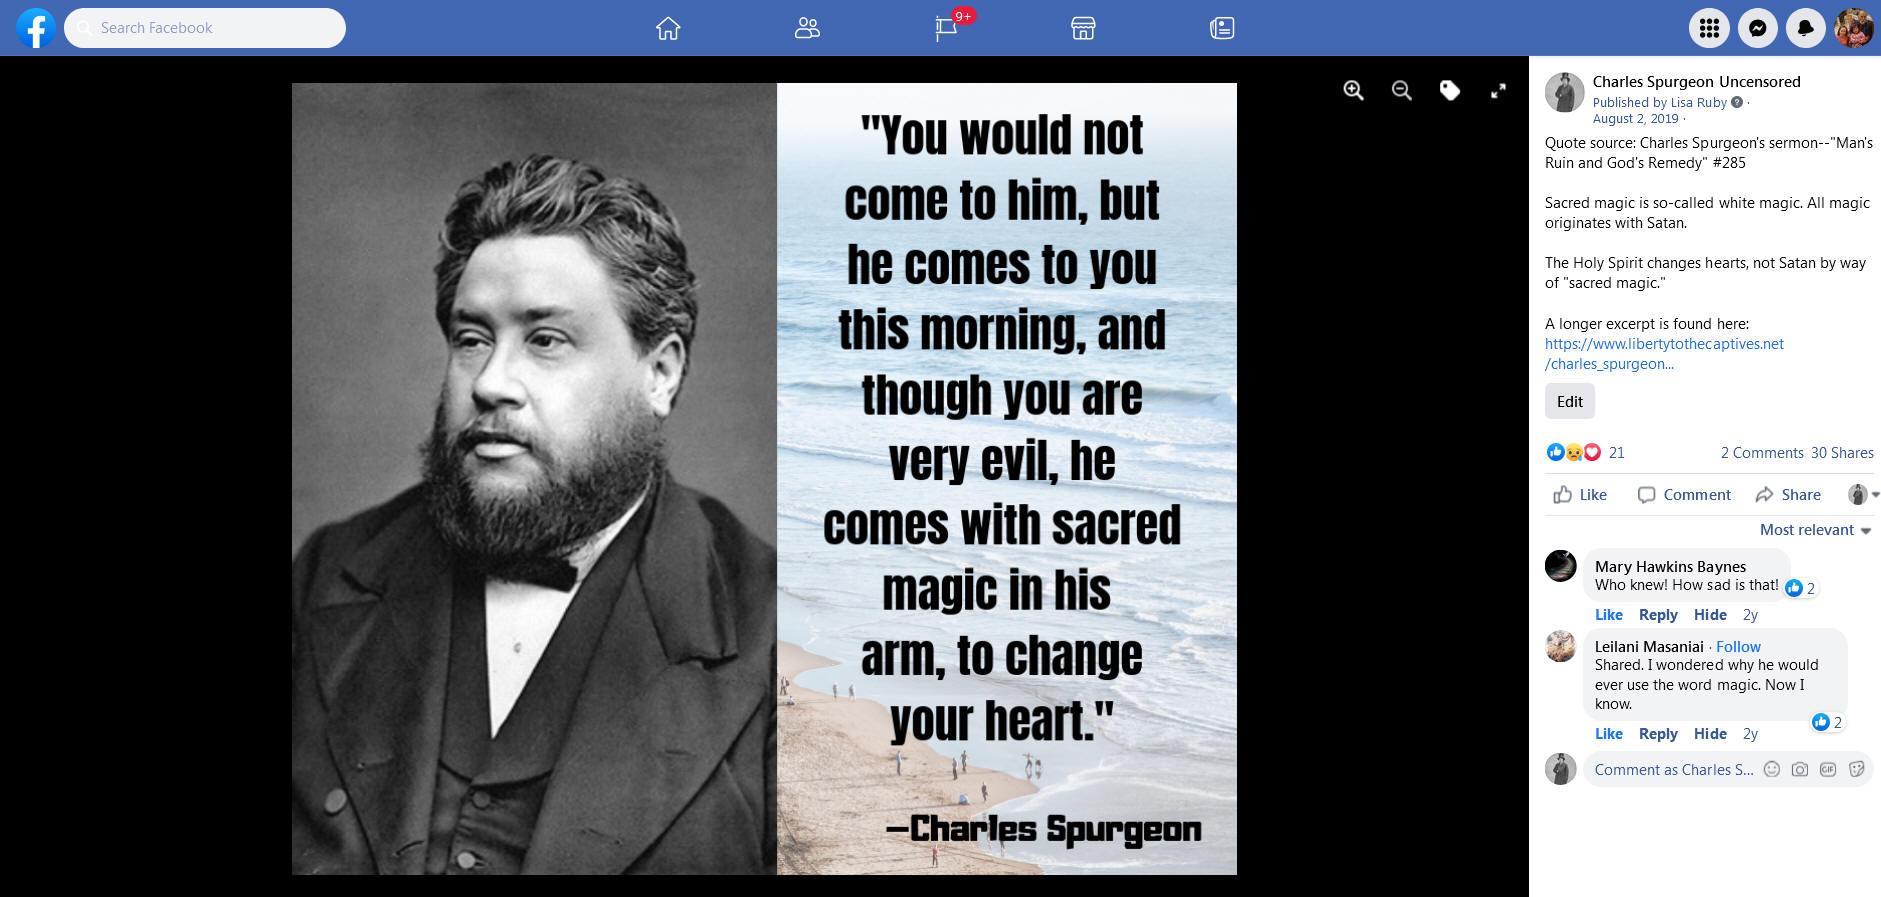 Charles Spurgeon said that Christ comes with sacred magic to change your heart. 